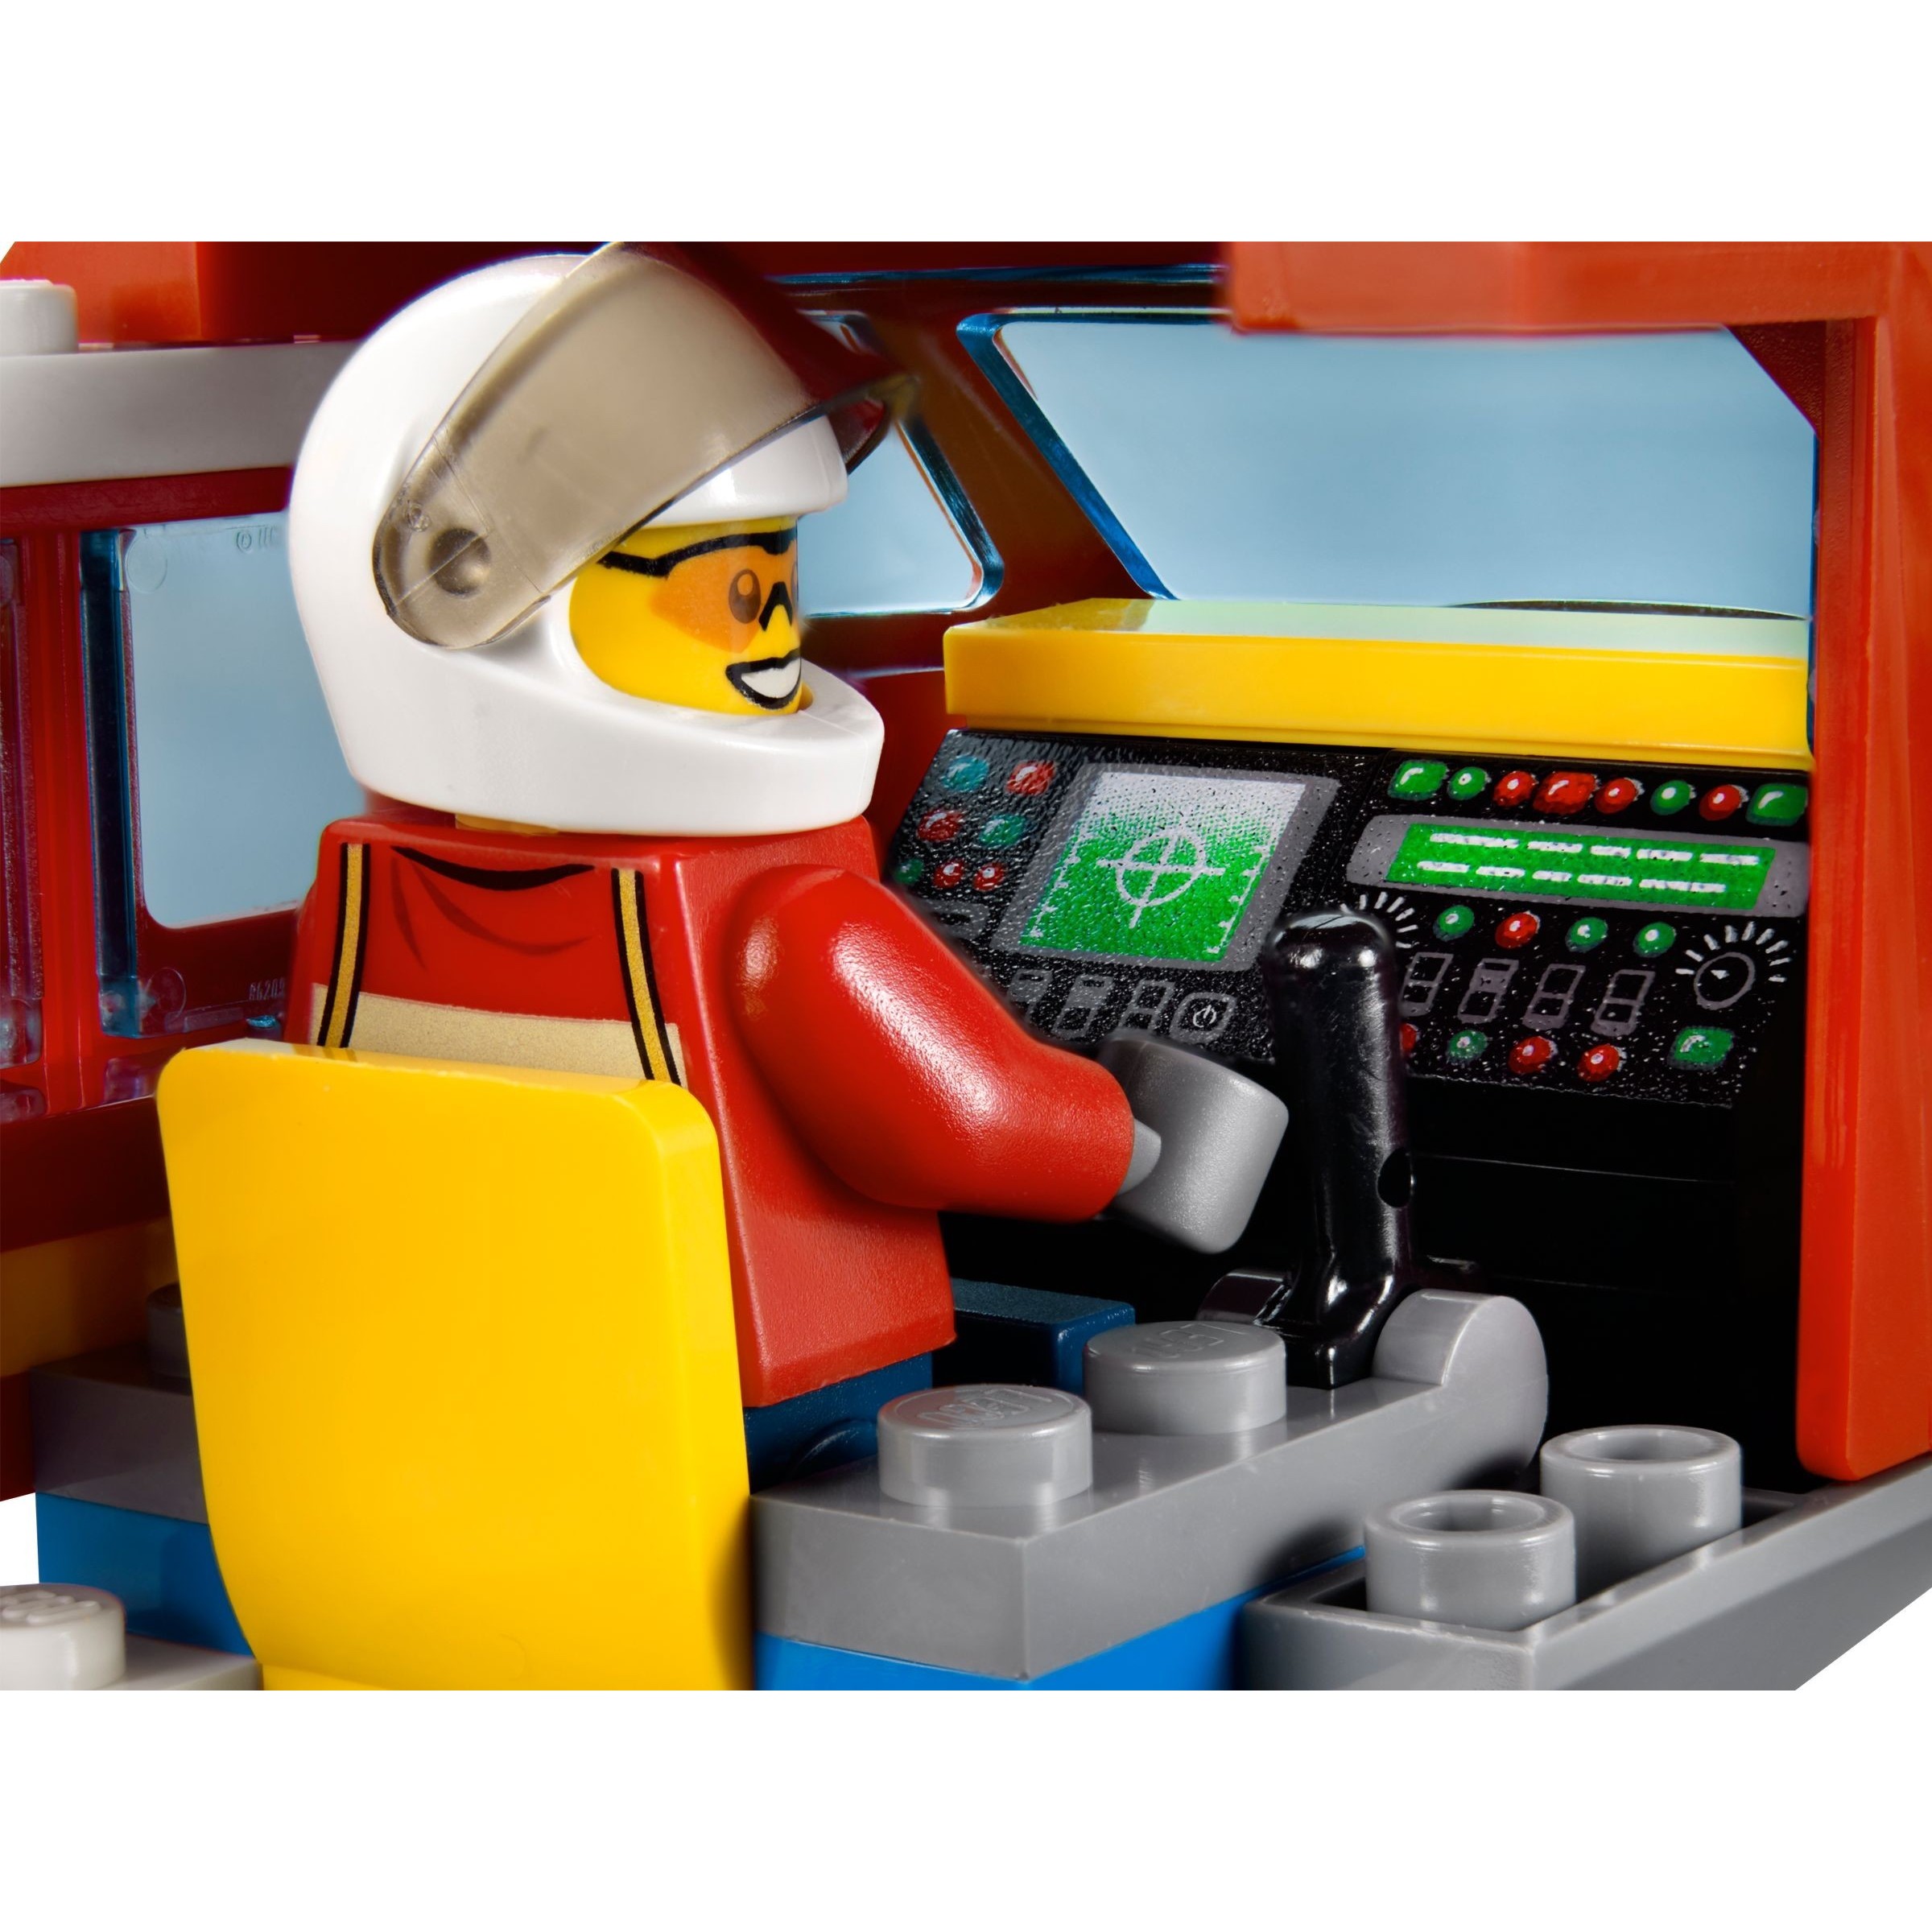 Конструктор Lego Fire Plane 4209